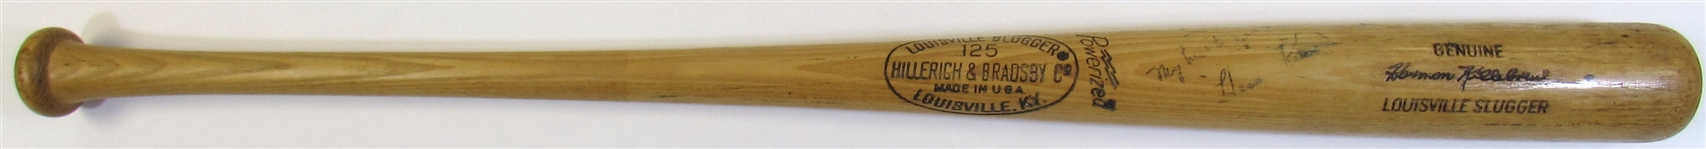 1973-75 Harmon Killebrew GU Signed Bat